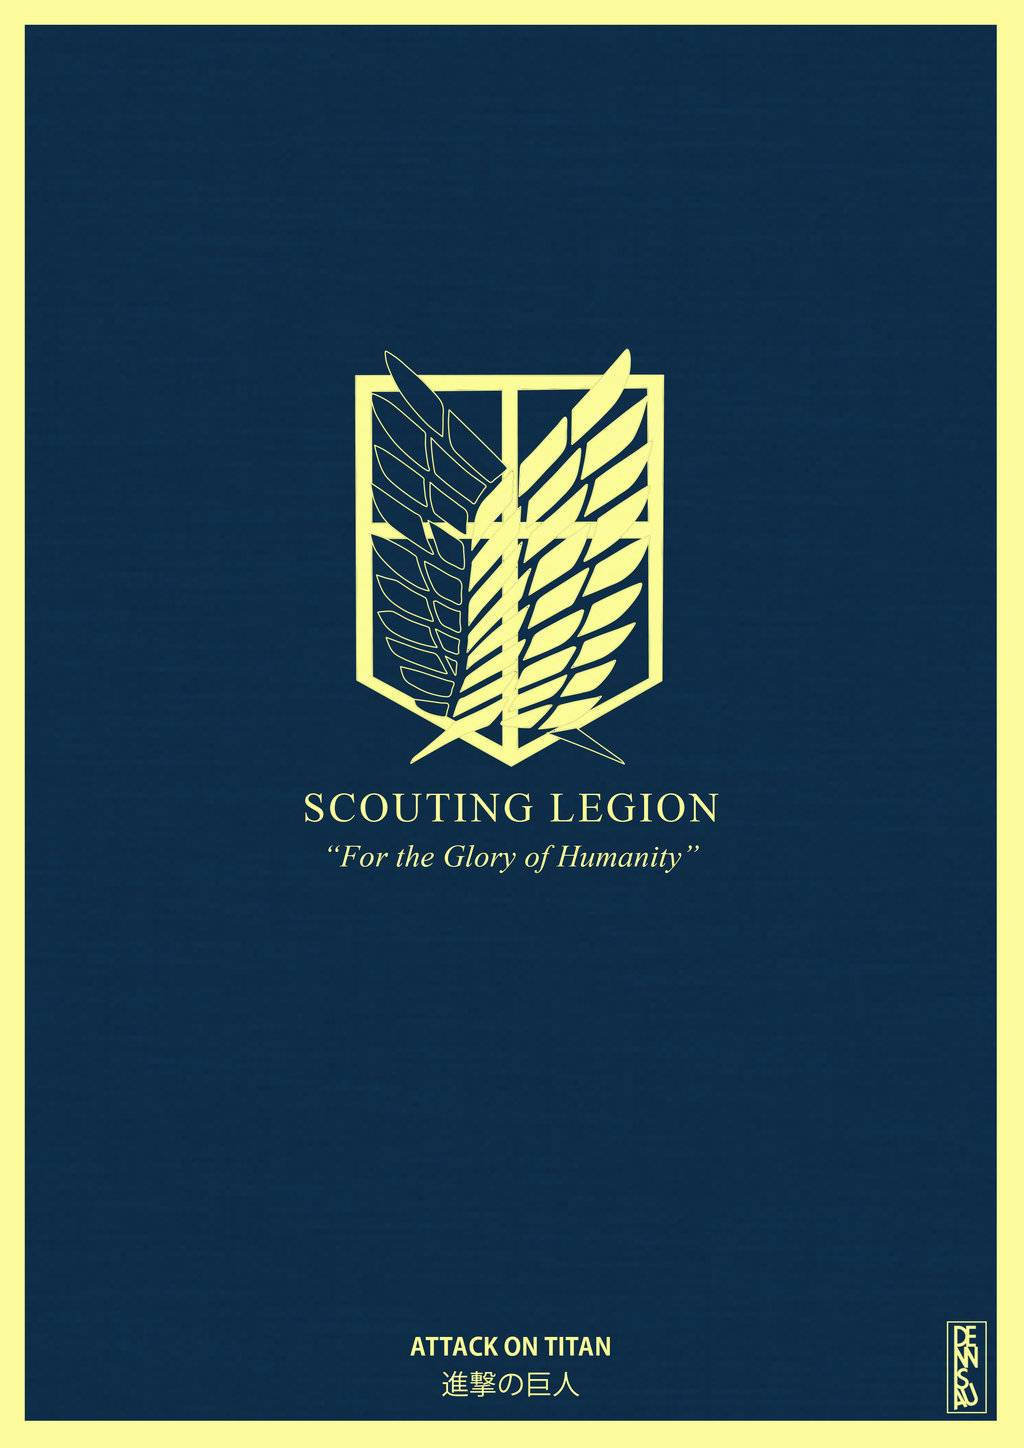 Scouting Legion Logo Attack On Titan Iphone